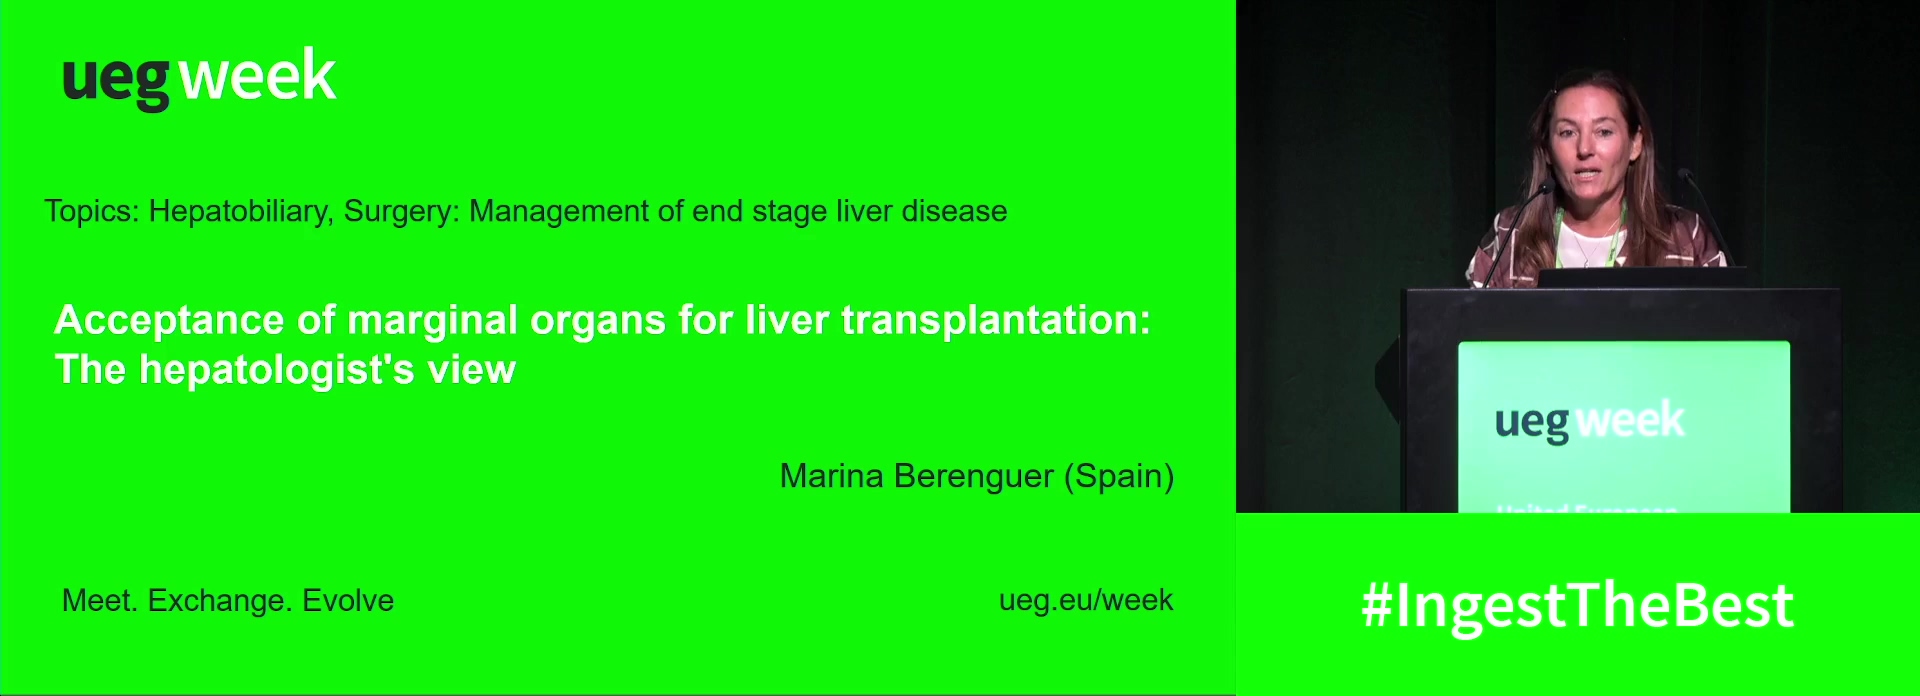 Acceptance of marginal organs for liver transplantation: The hepatologist's view